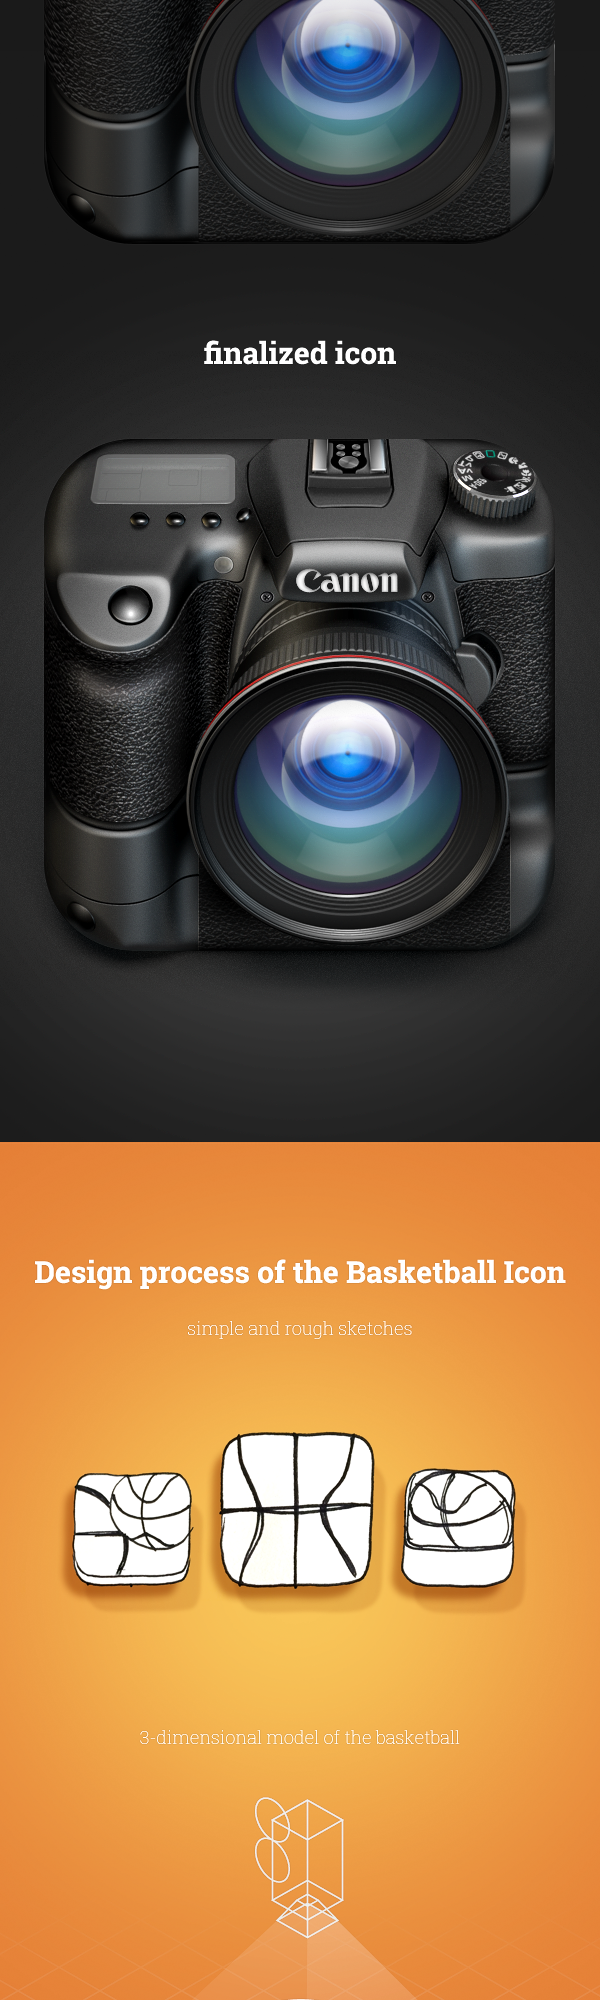 ios icons  Konstantin datz iphone Interface rendering  icon ios iphone5 icons 3D datz Konstantin